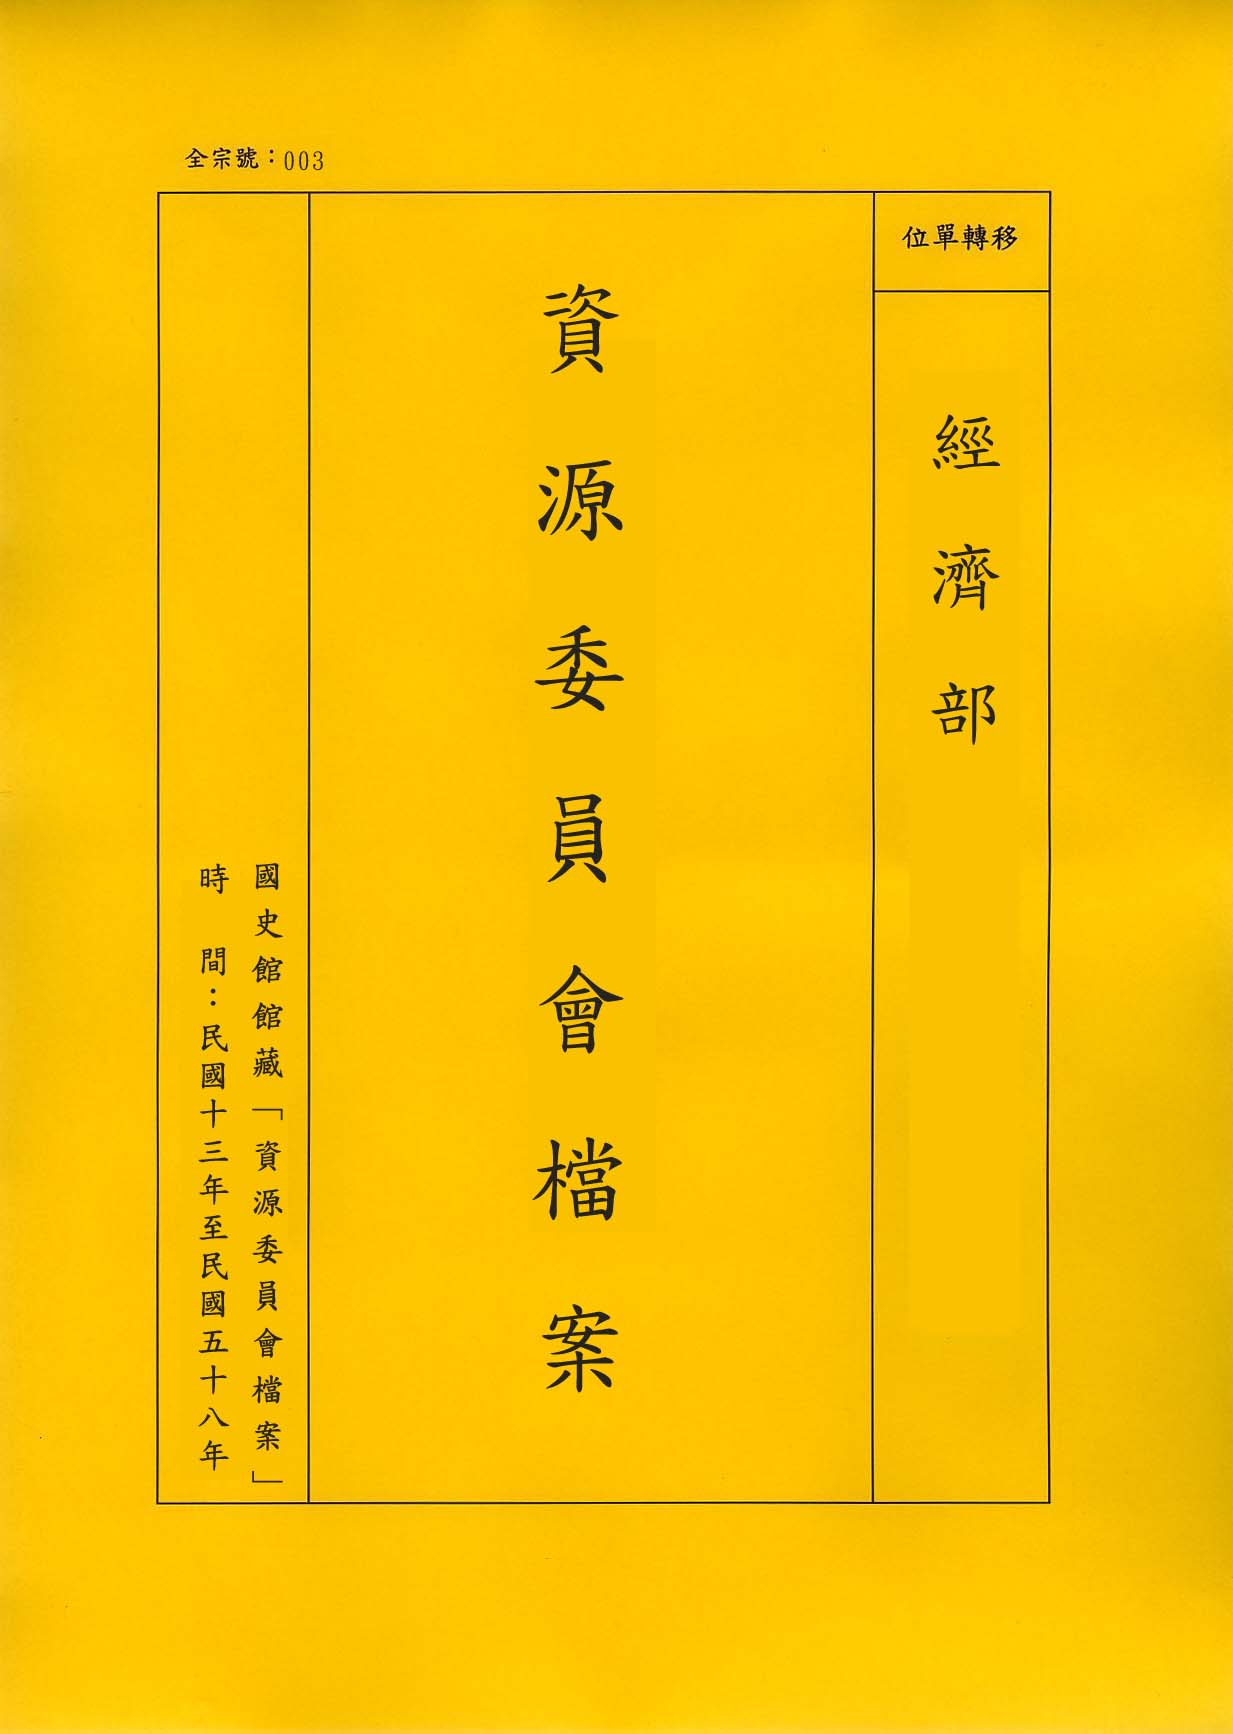 卷名:王述羲函件及個人資料S-304 Letters of Shu-Hsi Wang(003-020600-1664)